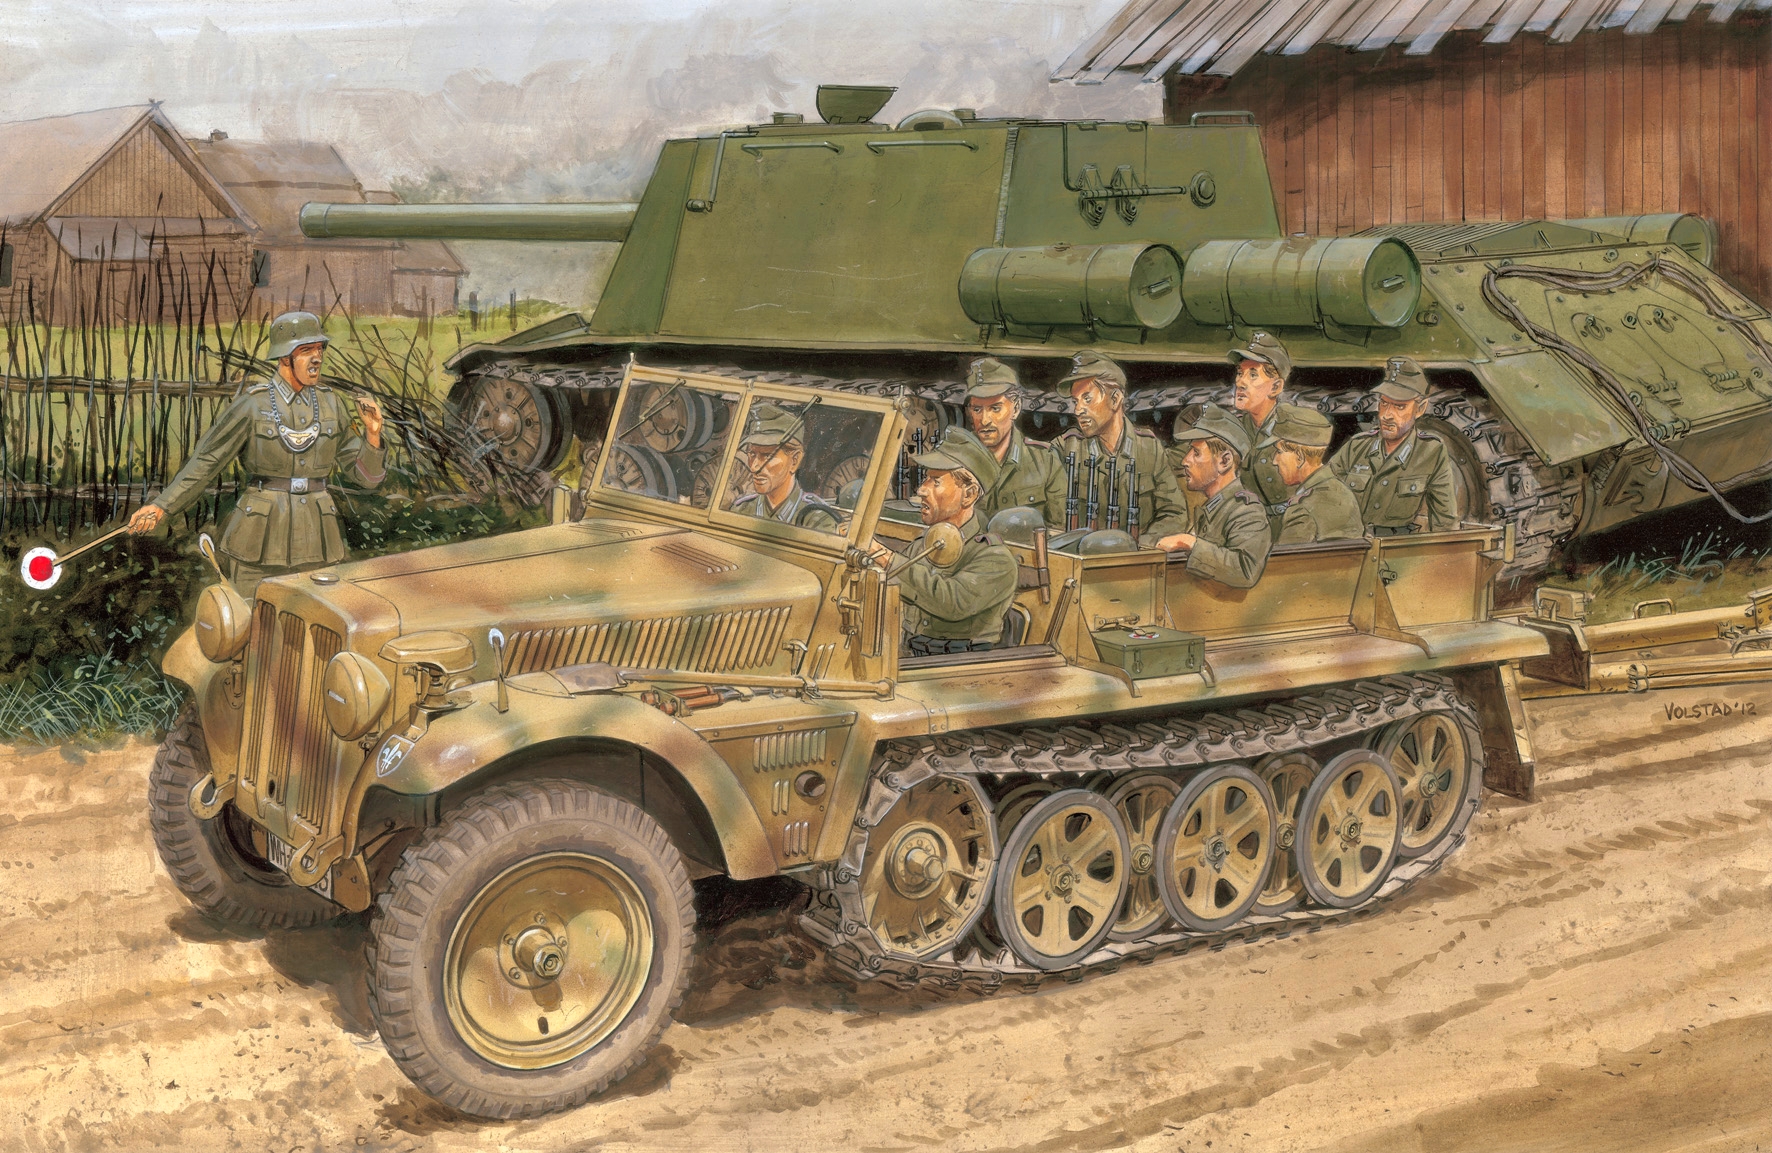 Volstad Ronald. Полугусеничный тягач Sd.Kfz.10 Ausf. B.